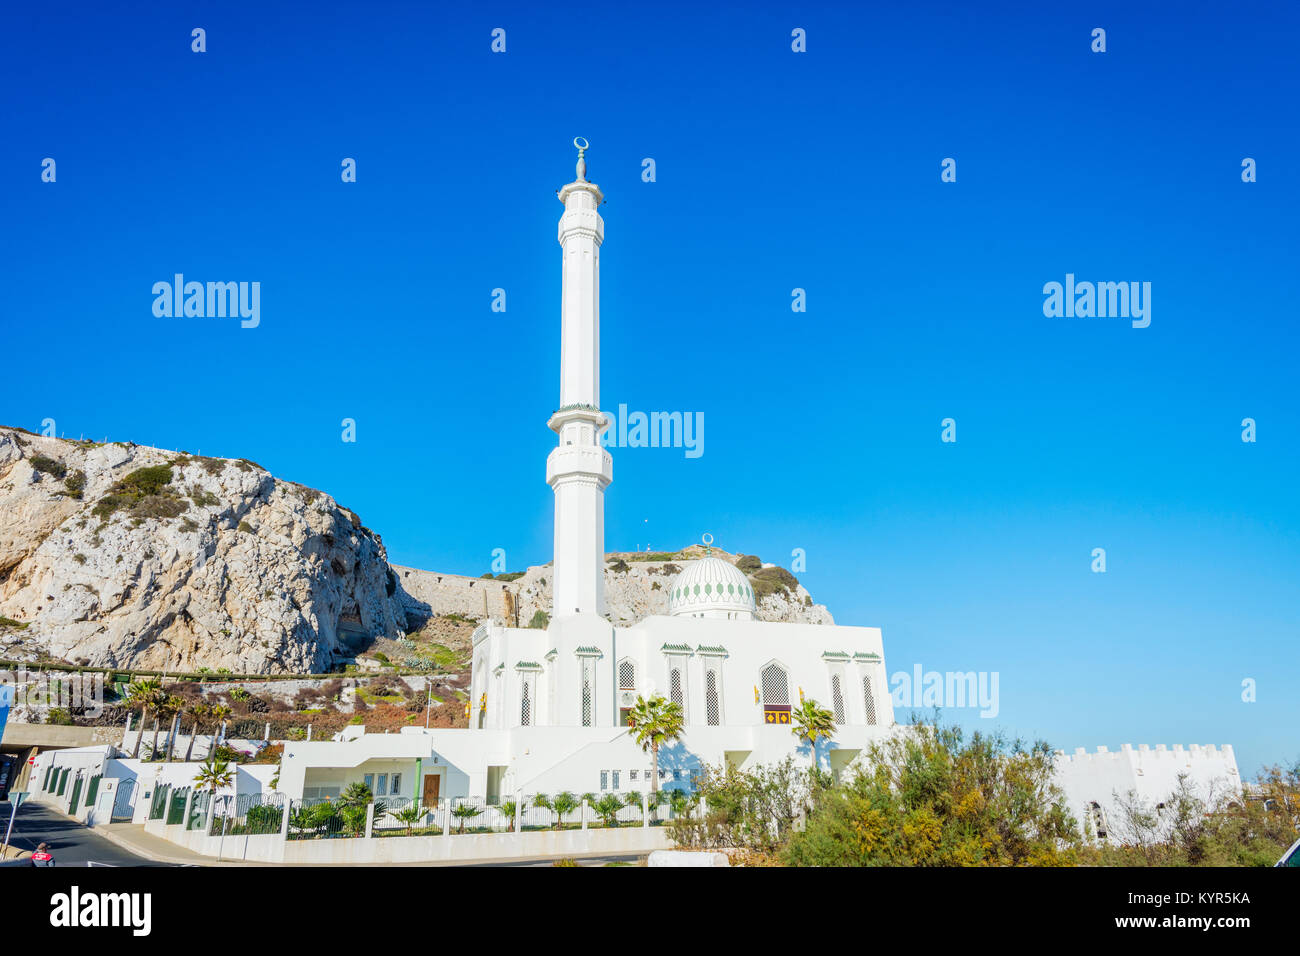 Ibrahim al Ibrahim or King Fahd bin Abdulaziz al-Saud Mosque at Europa point, Gibraltar Stock Photo